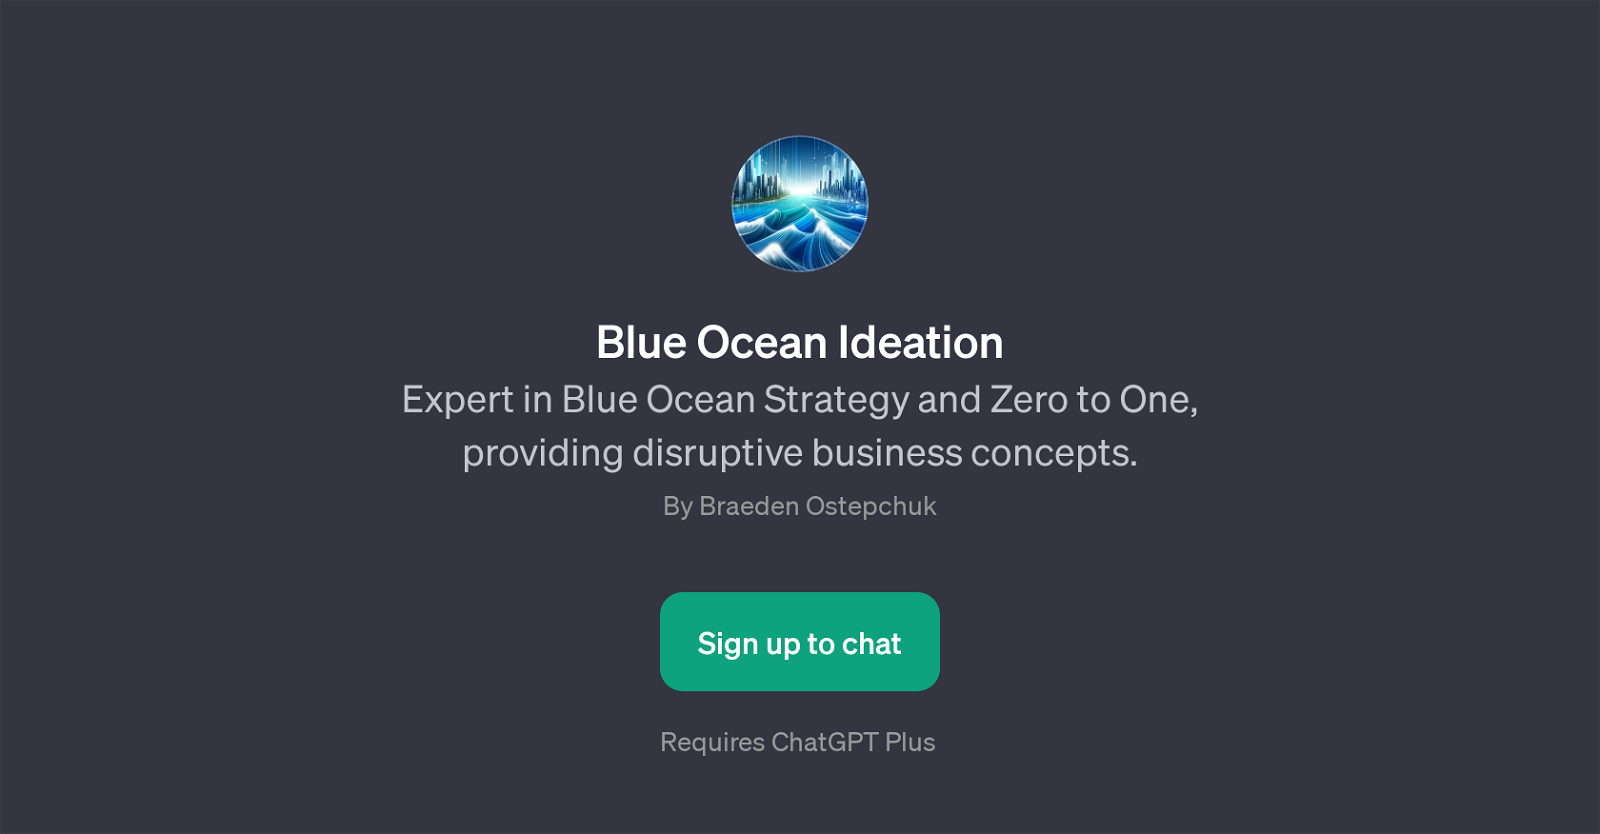 Blue Ocean Ideation website